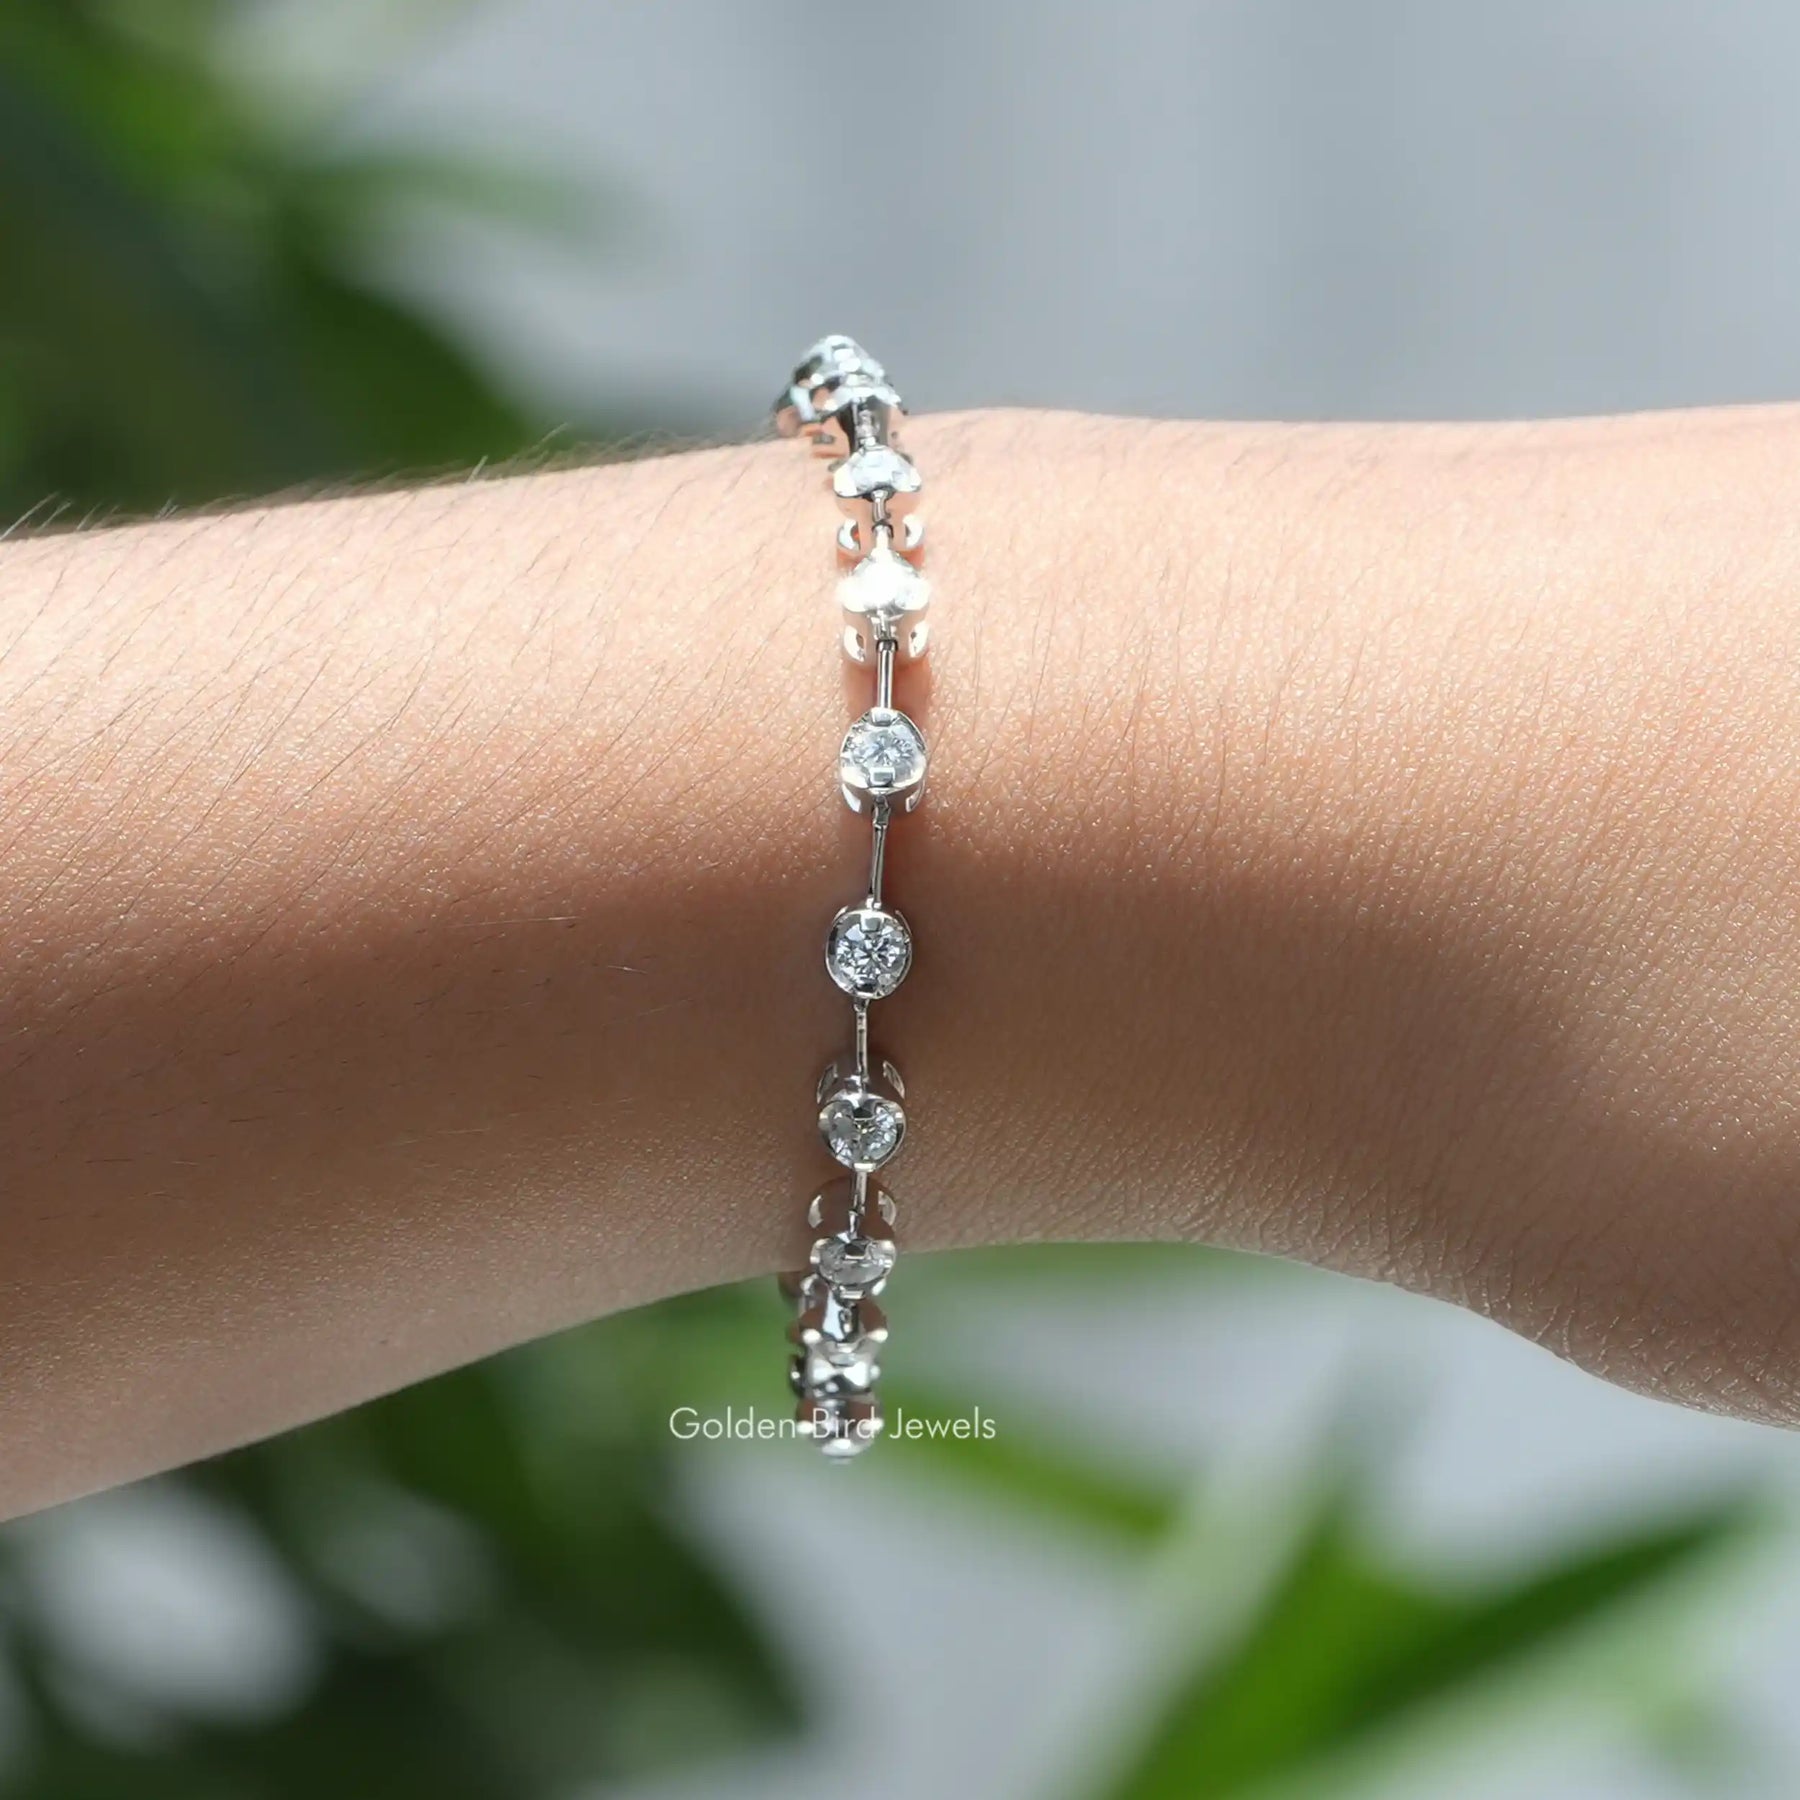 [This moissanite bangle bracelet made of round cut stones]-[Golden Bird Jewels]